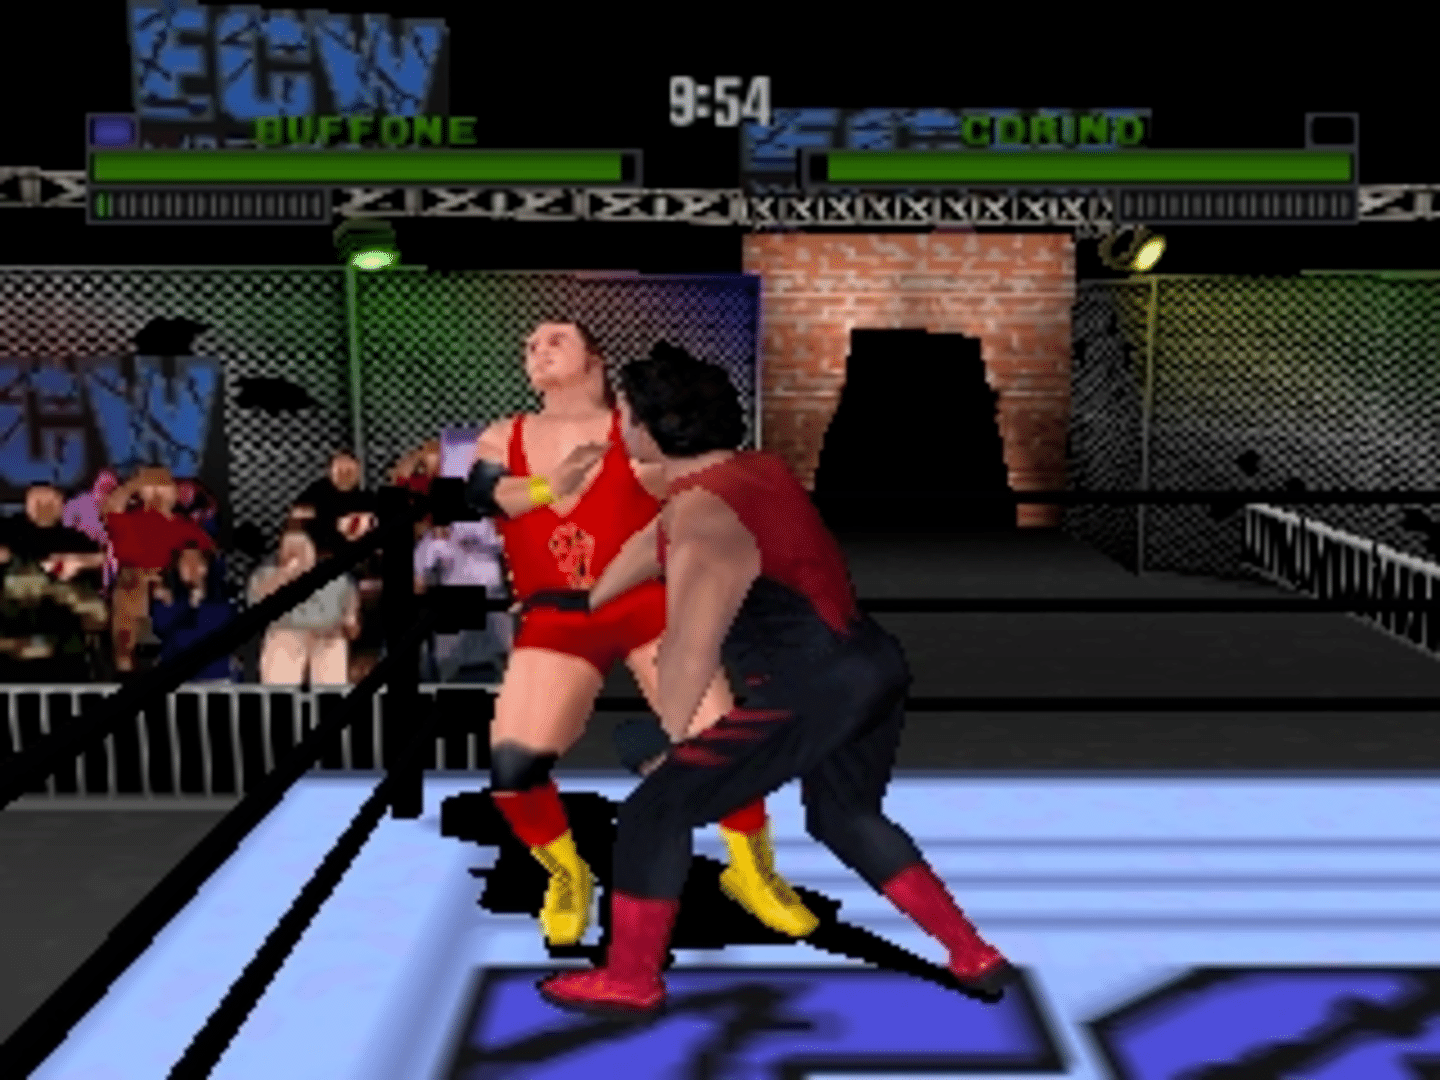 ECW Hardcore Revolution screenshot